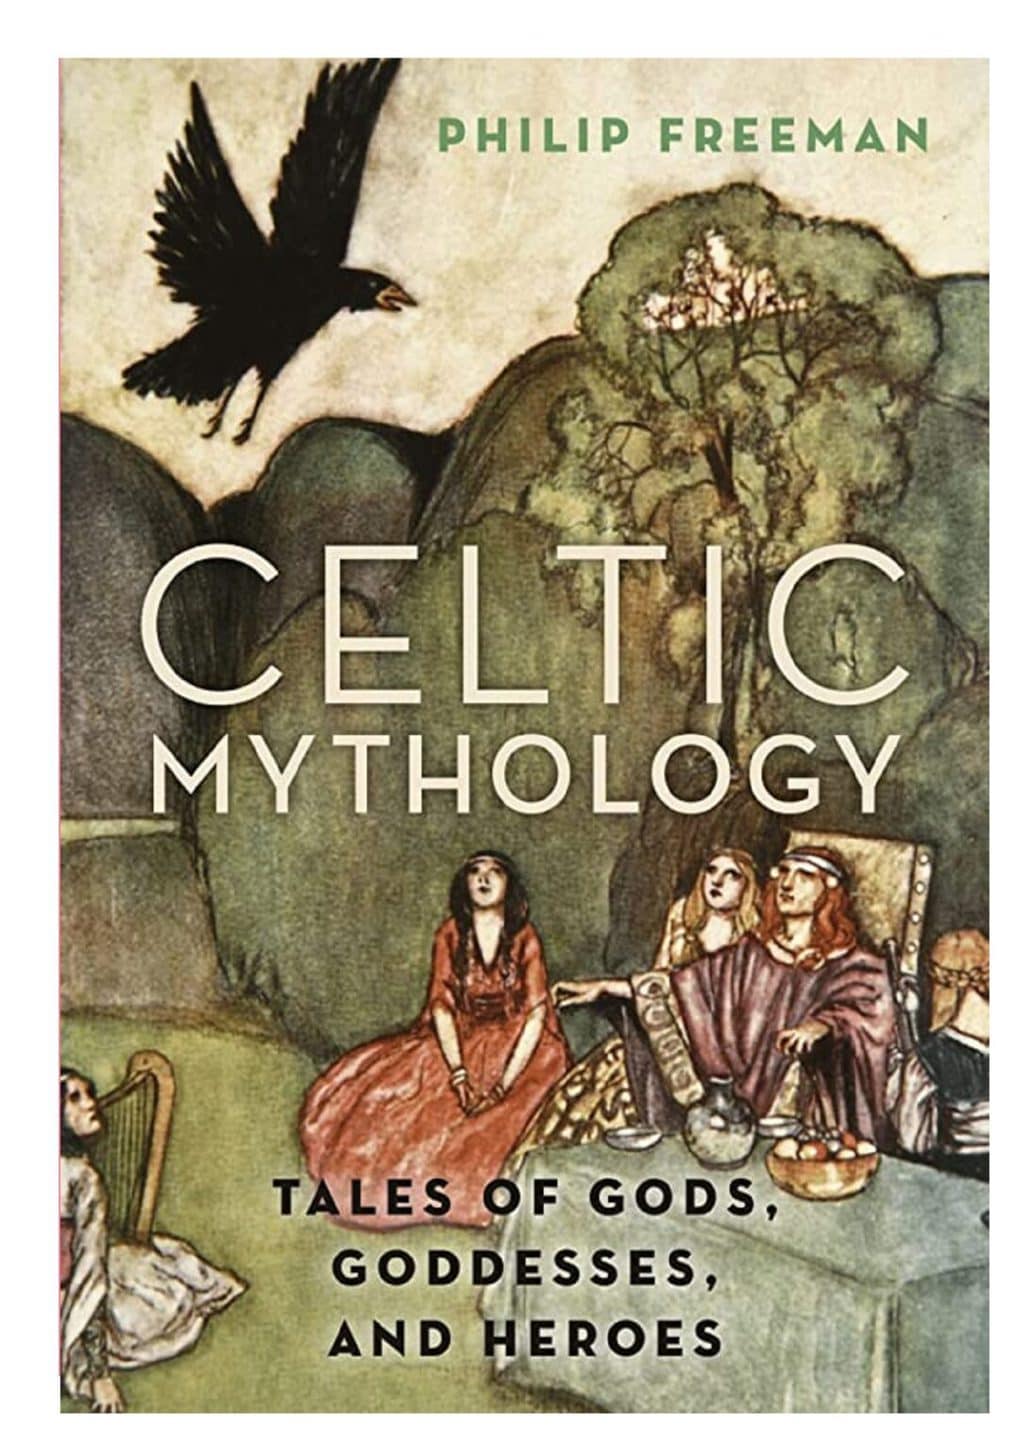 Irish Folklore: 23 Irish Legends And Myths